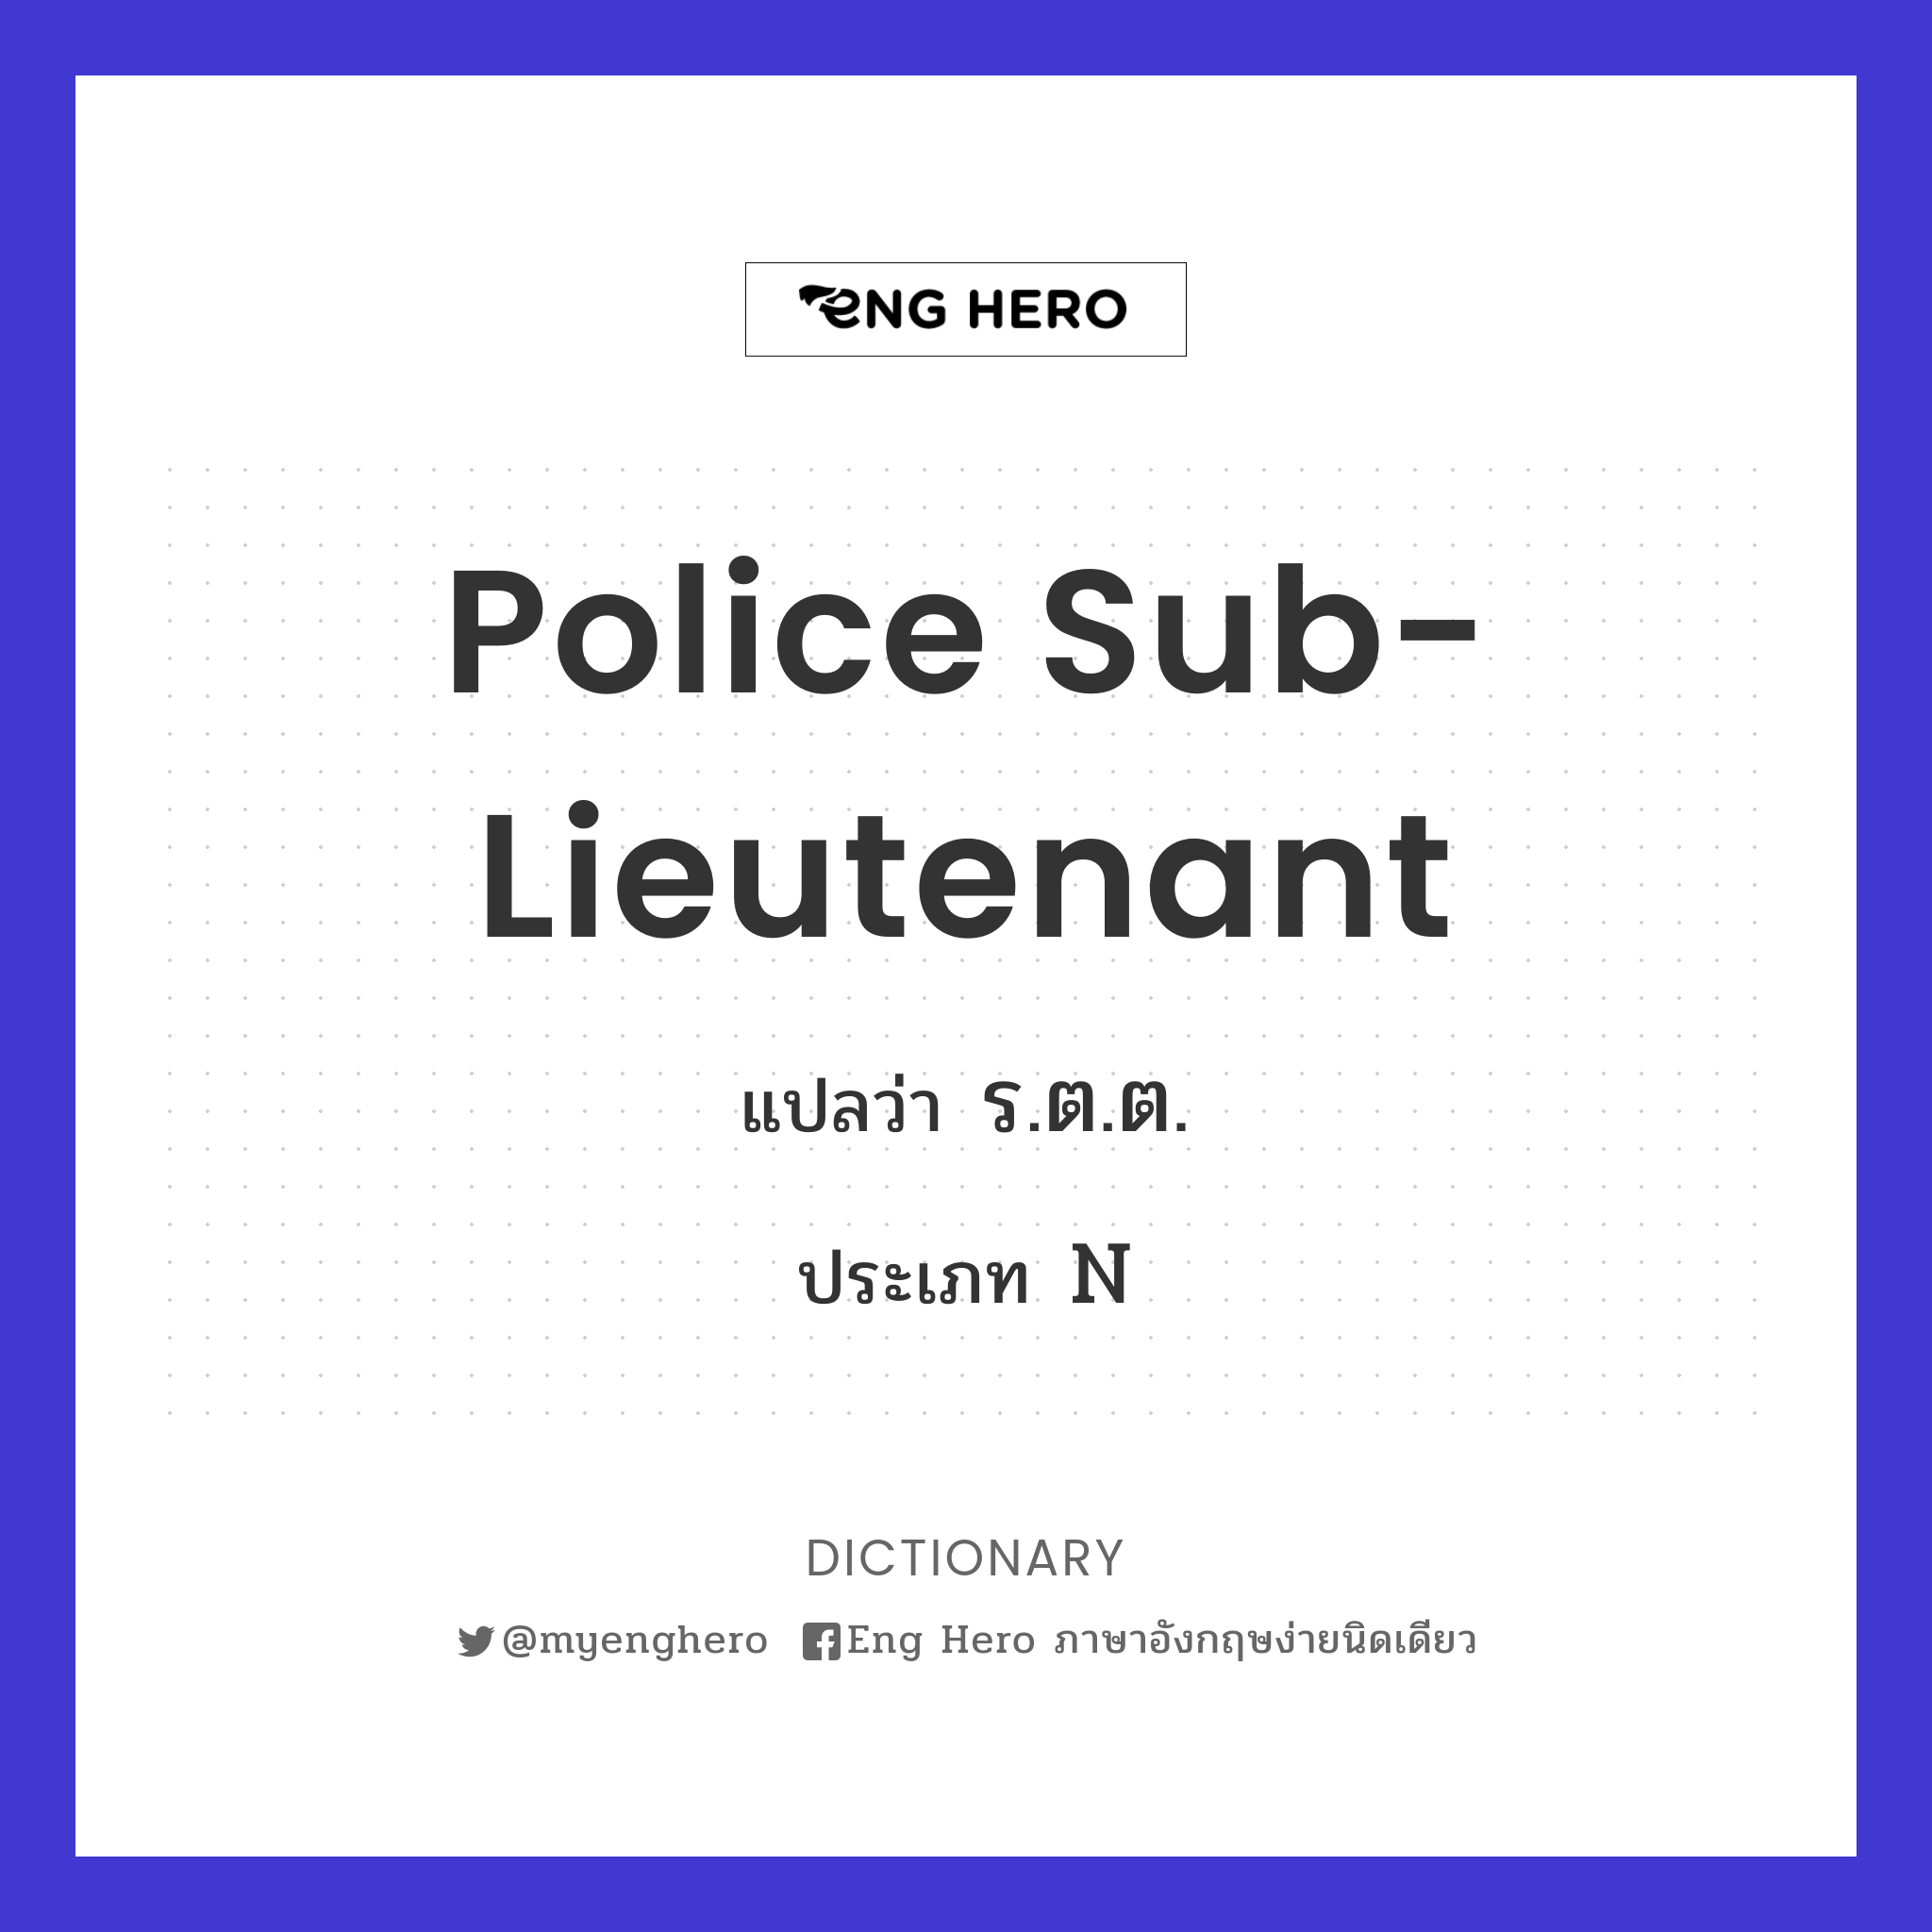 police sub- lieutenant